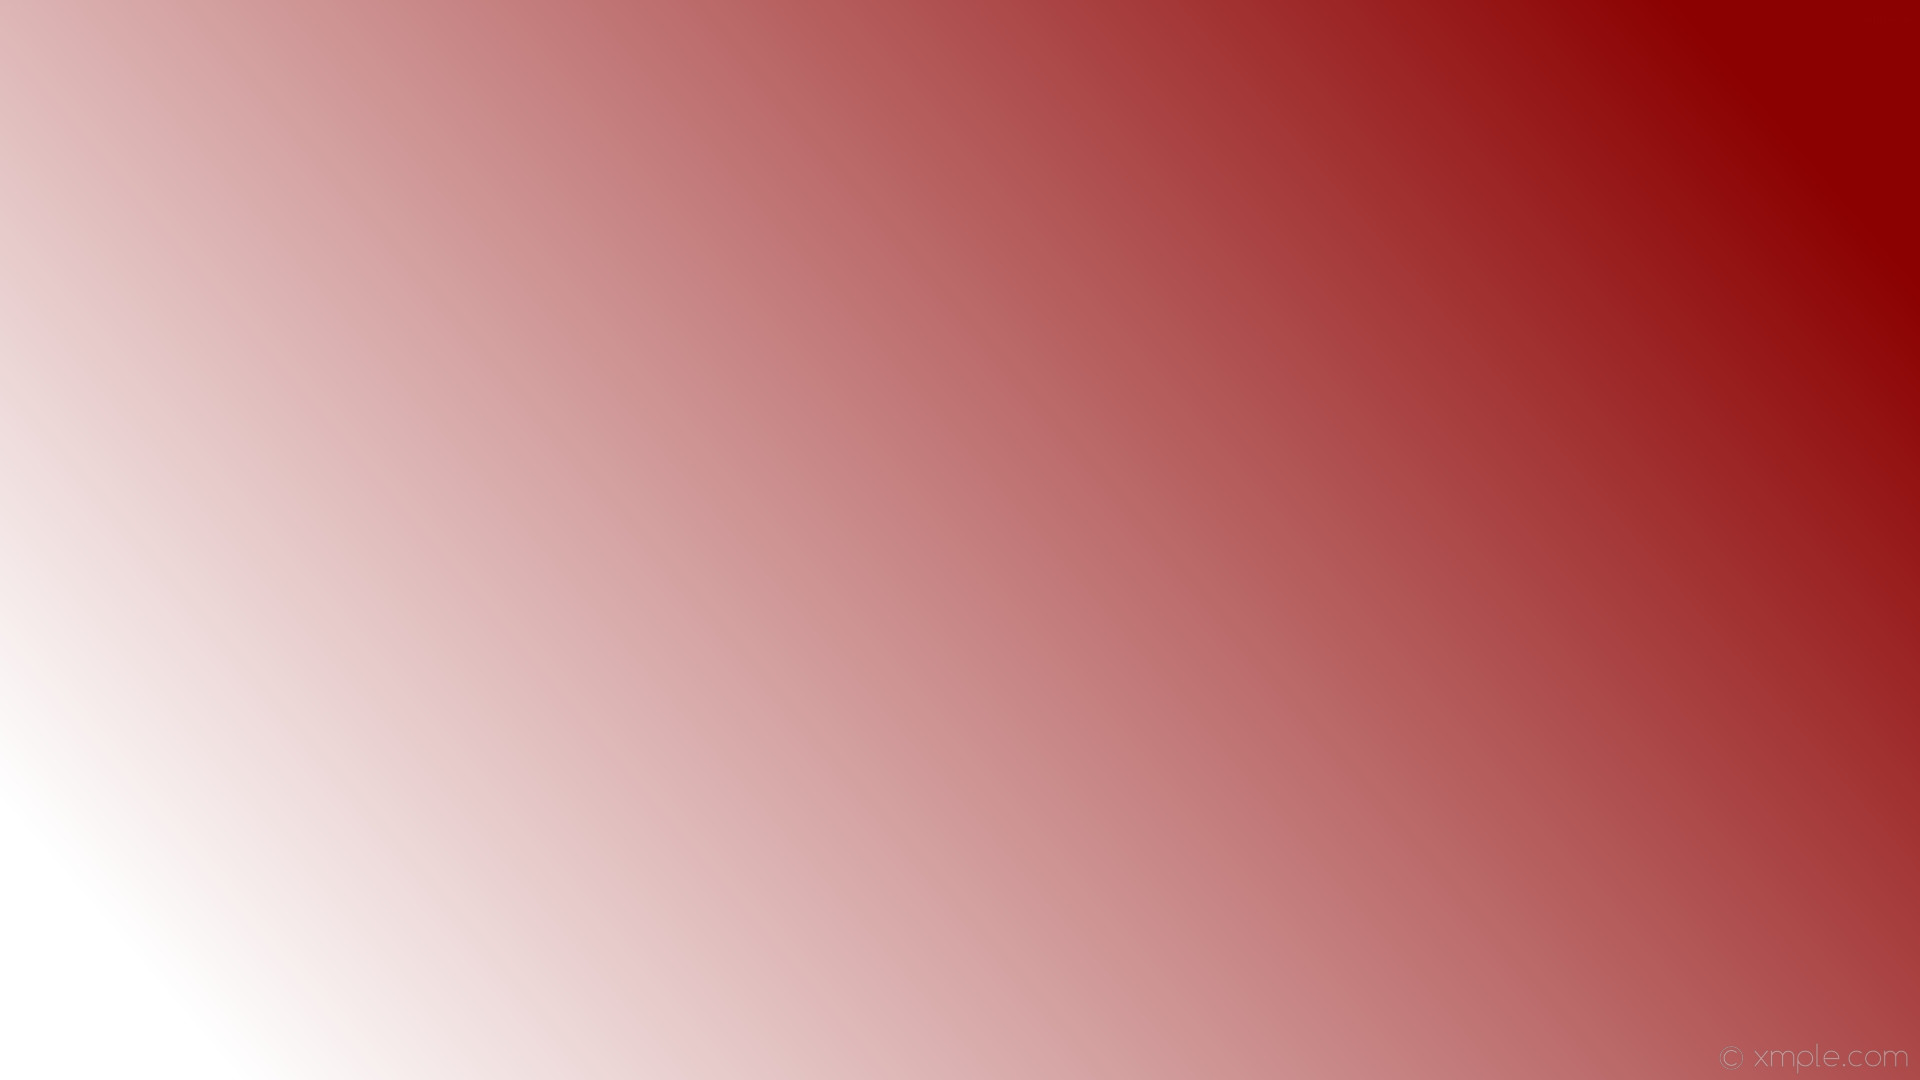 wallpaper white red gradient linear dark red #ffffff #8b0000 195Â°